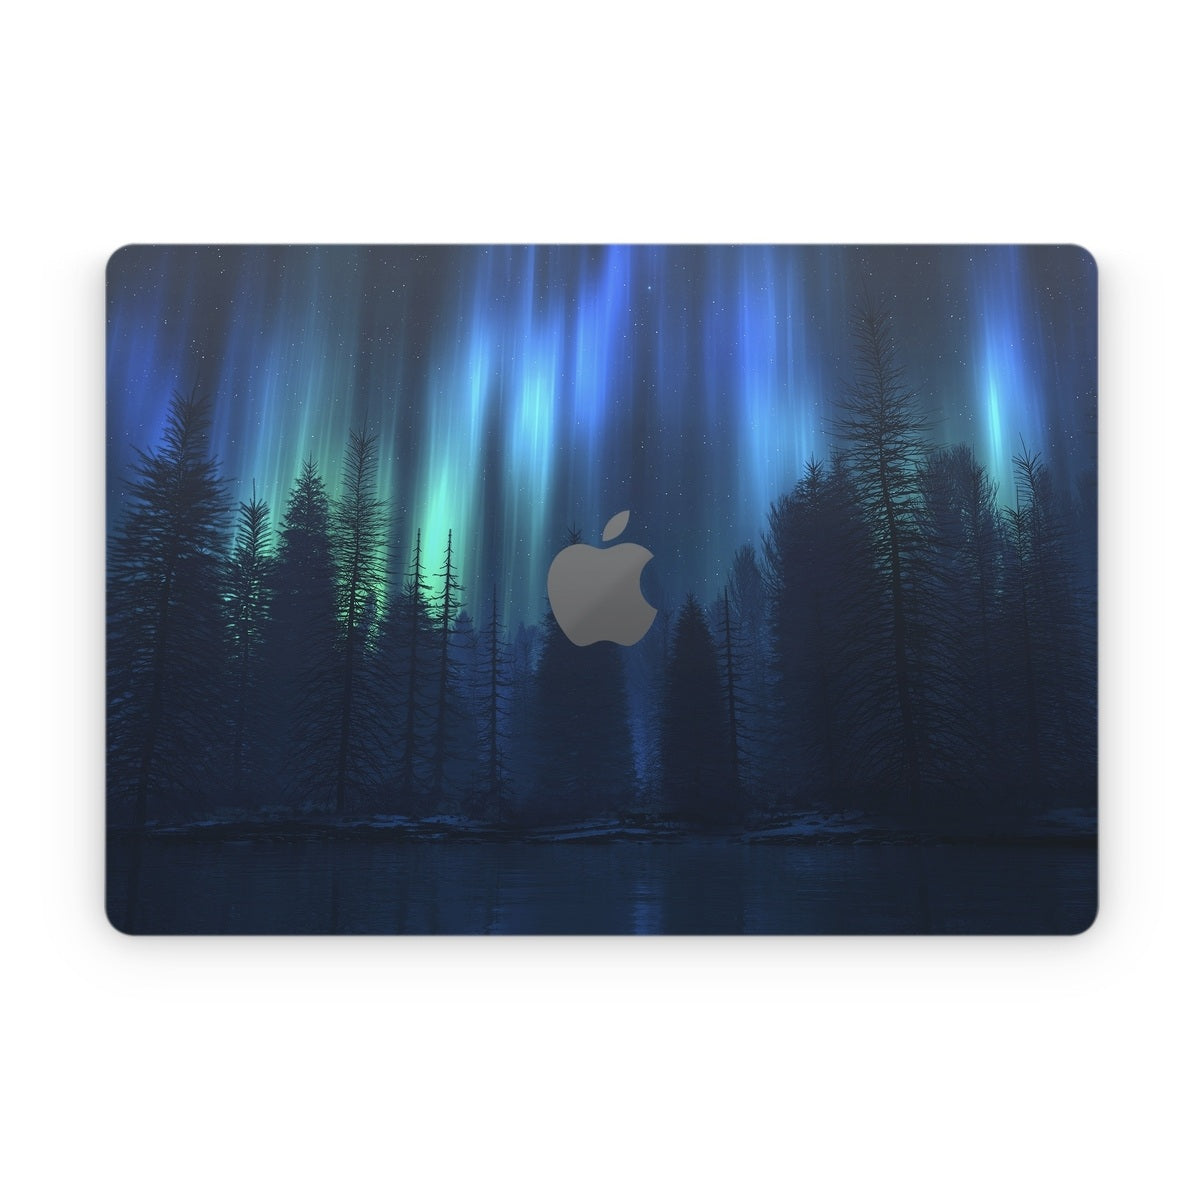 Song of the Sky - Apple MacBook Skin